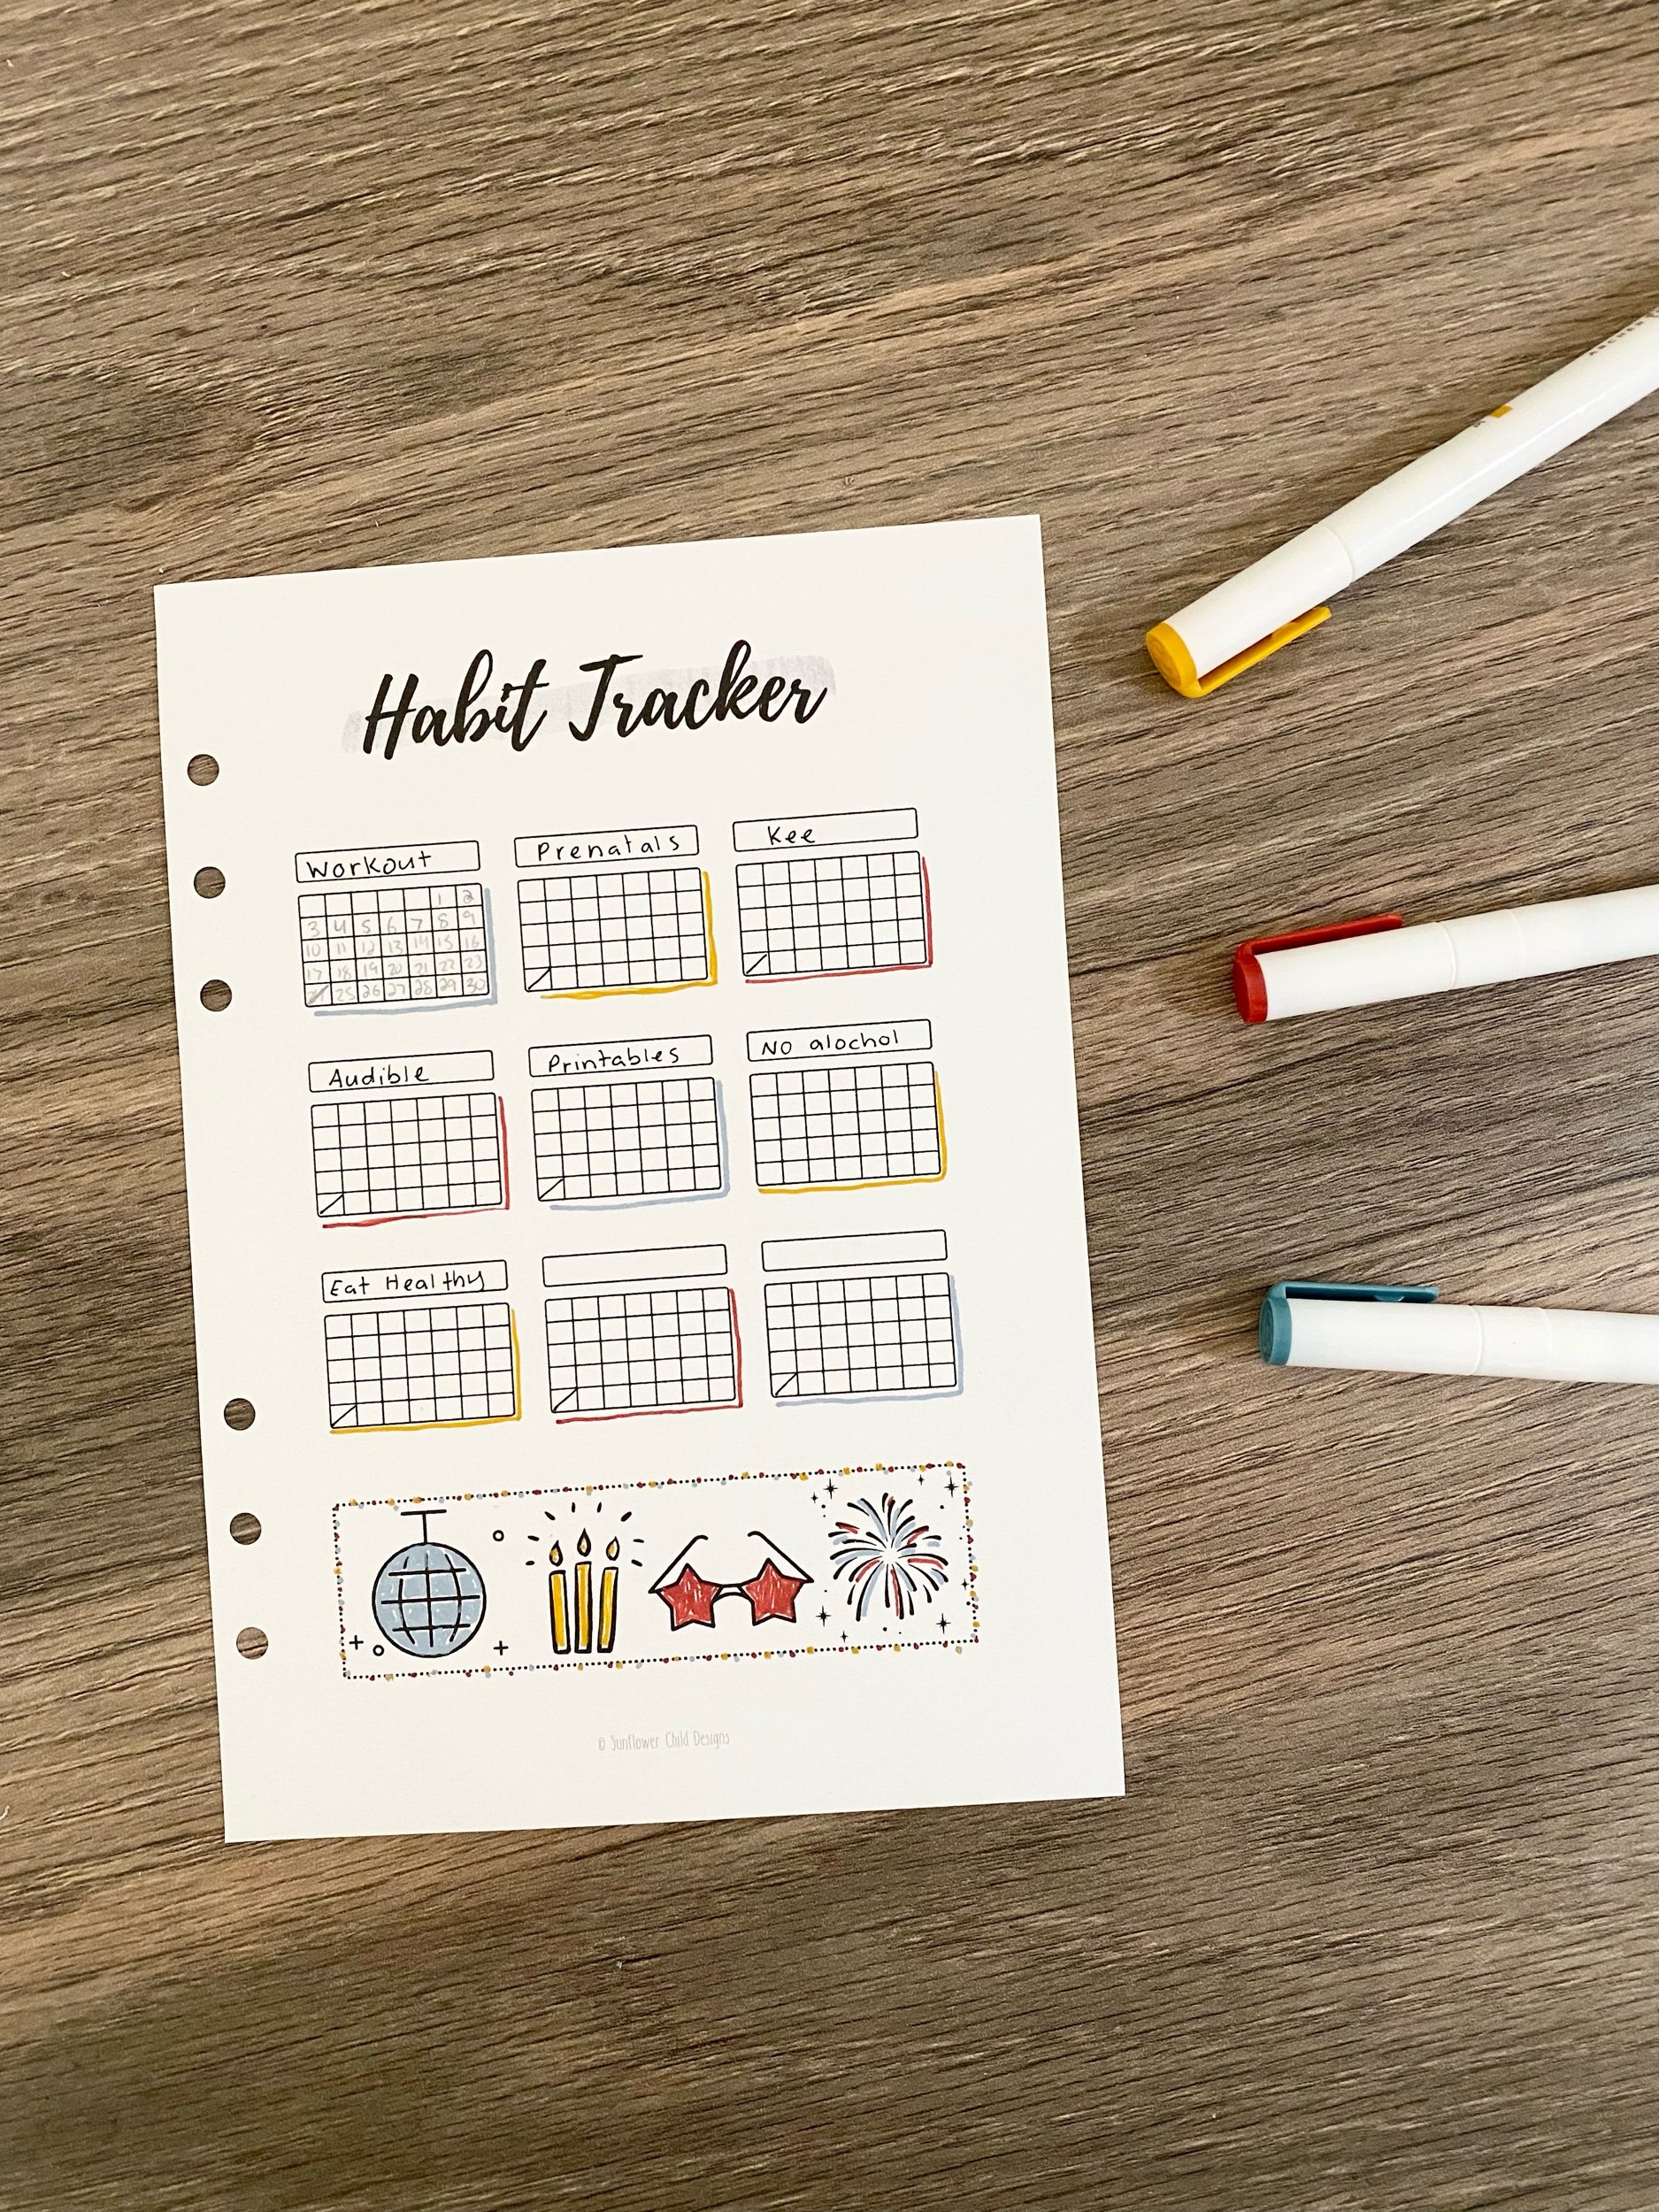 30 Simple Habit Tracker Bullet Journal Ideas For 2022